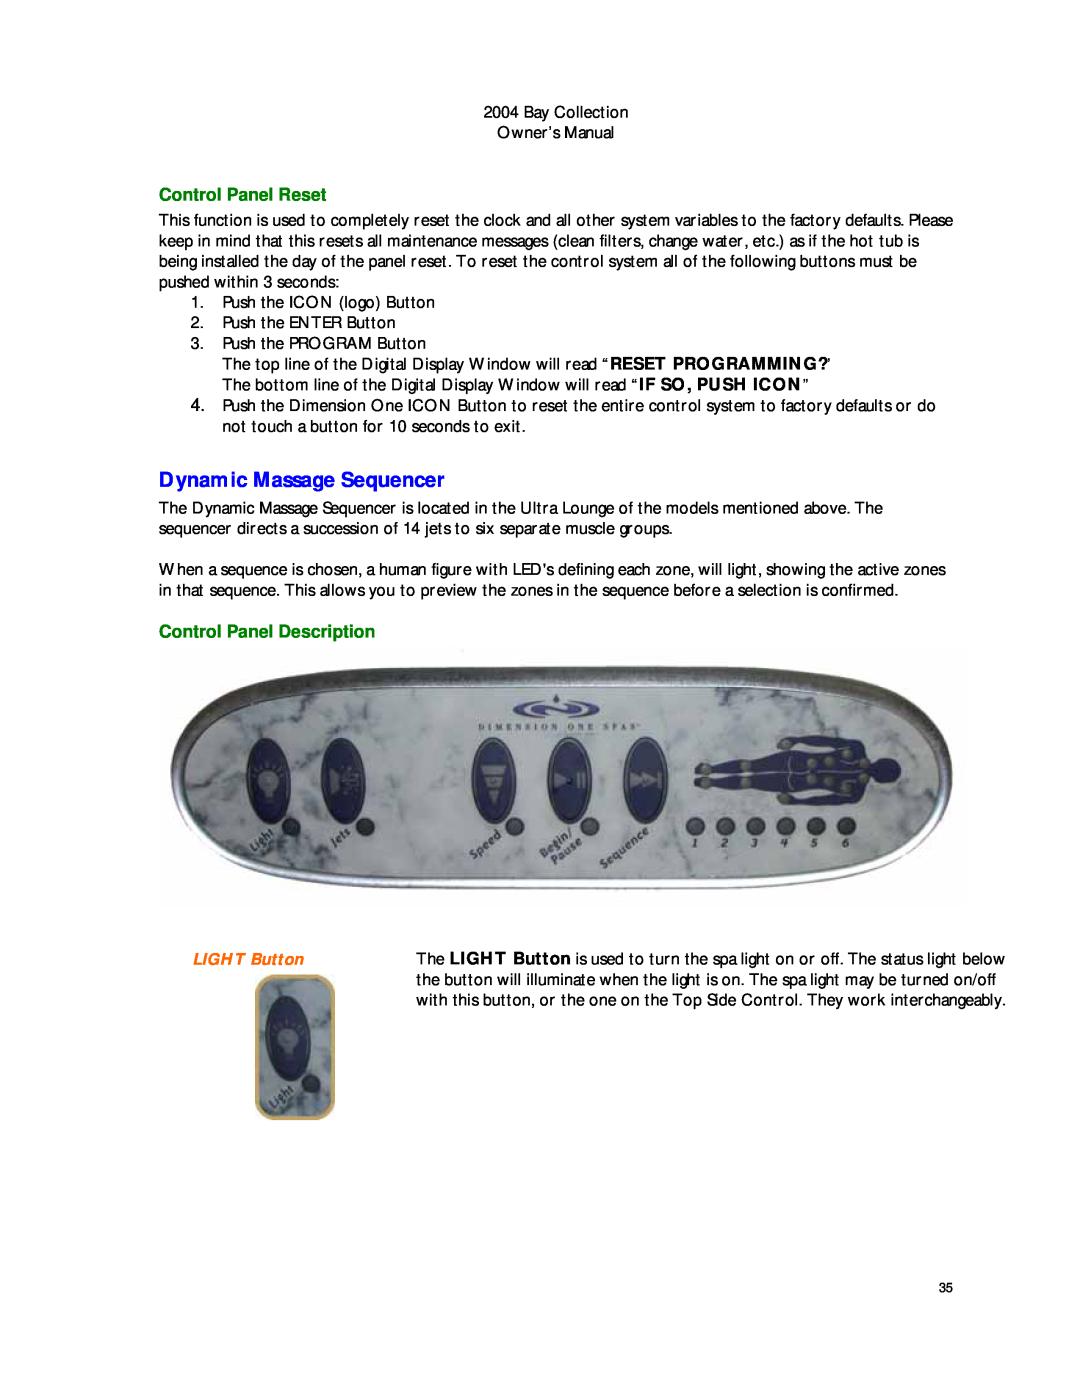 Dimension One Spas Bay Collection Dynamic Massage Sequencer, Control Panel Reset, Control Panel Description, LIGHT Button 